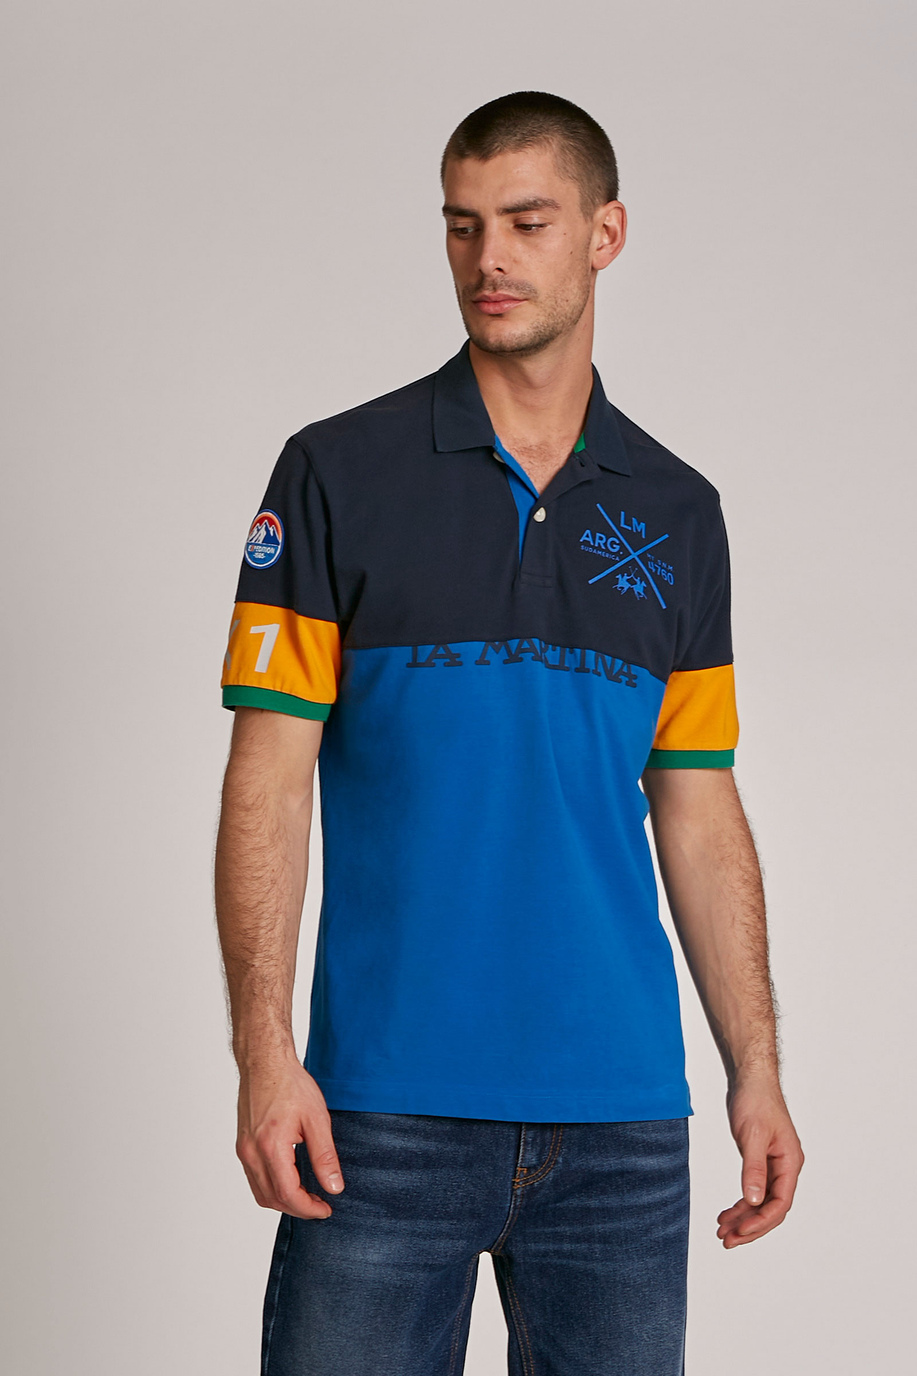 Herren-Poloshirt mit kurzem Arm aus 100 % Baumwolle, oversized Modell - -40% | step 3 | US | La Martina - Official Online Shop